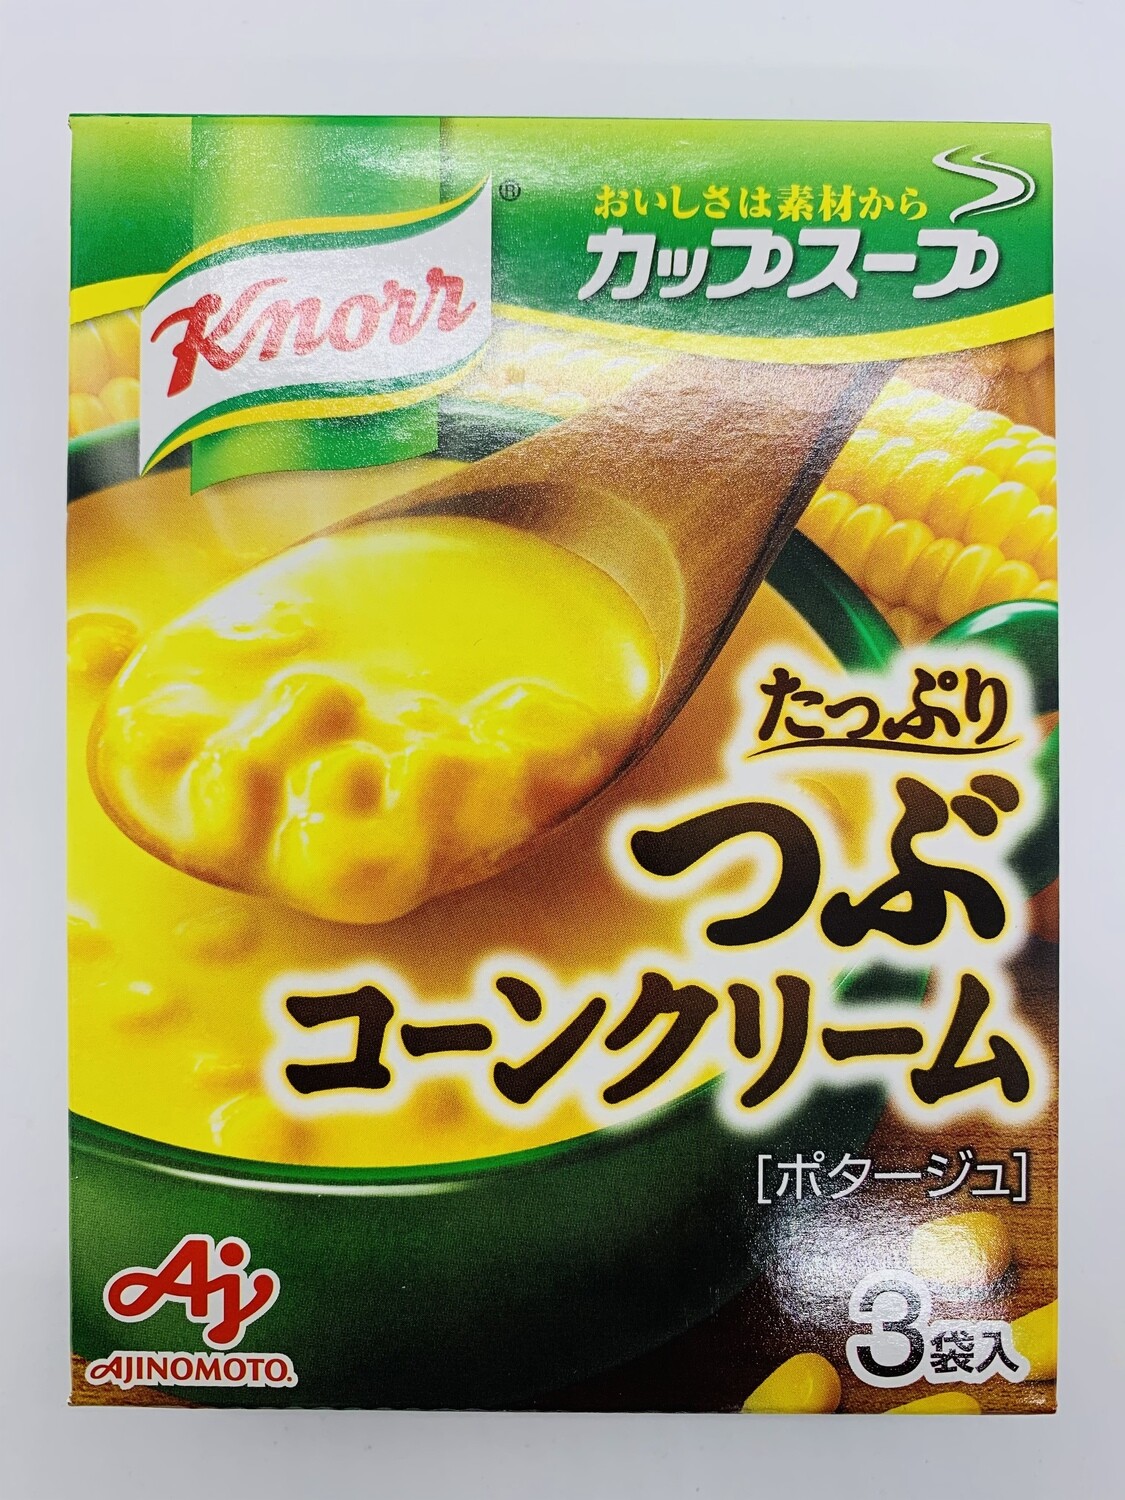 KNORR Cup Soup Tsubutsubu Corn Cream